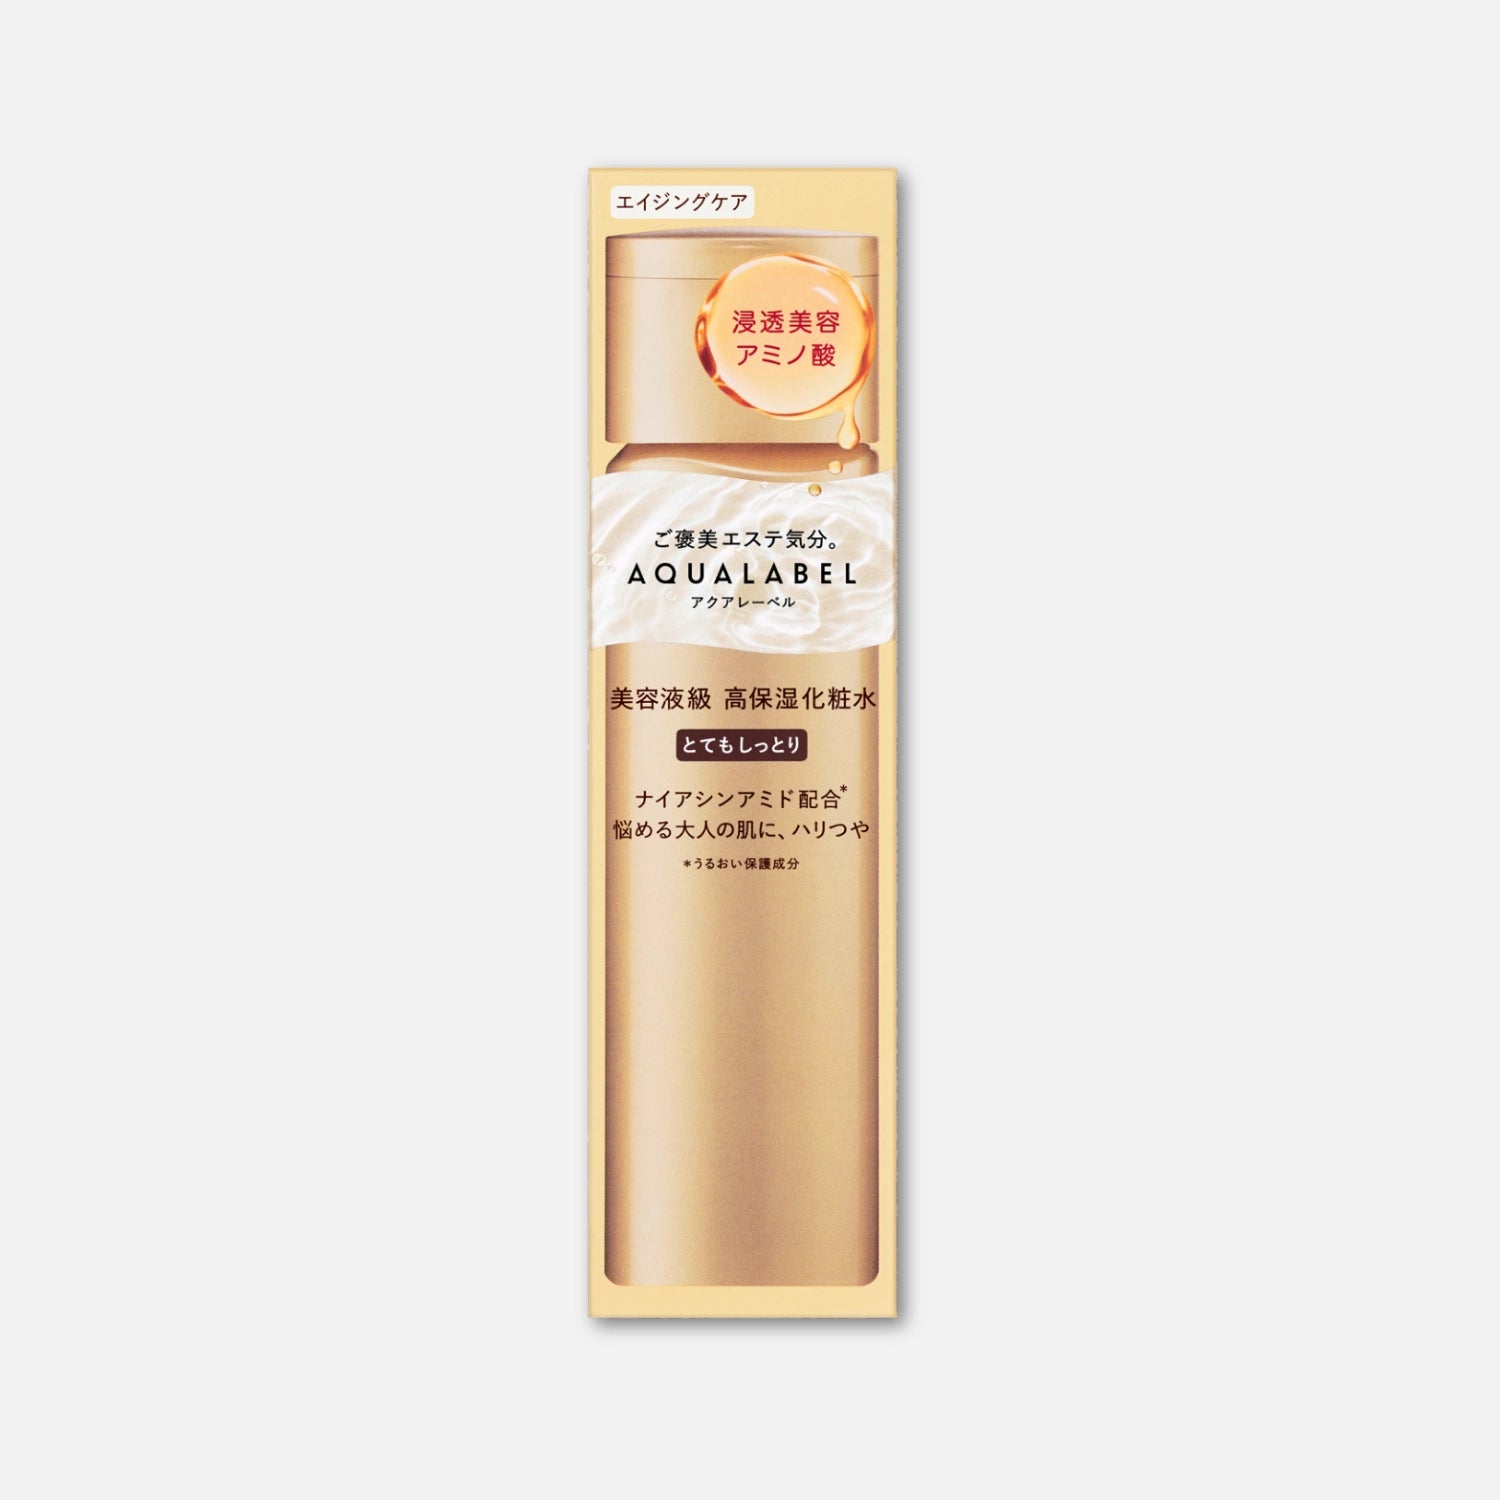 Shiseido AQUALABEL Treatment Lotion Oil In 170ml